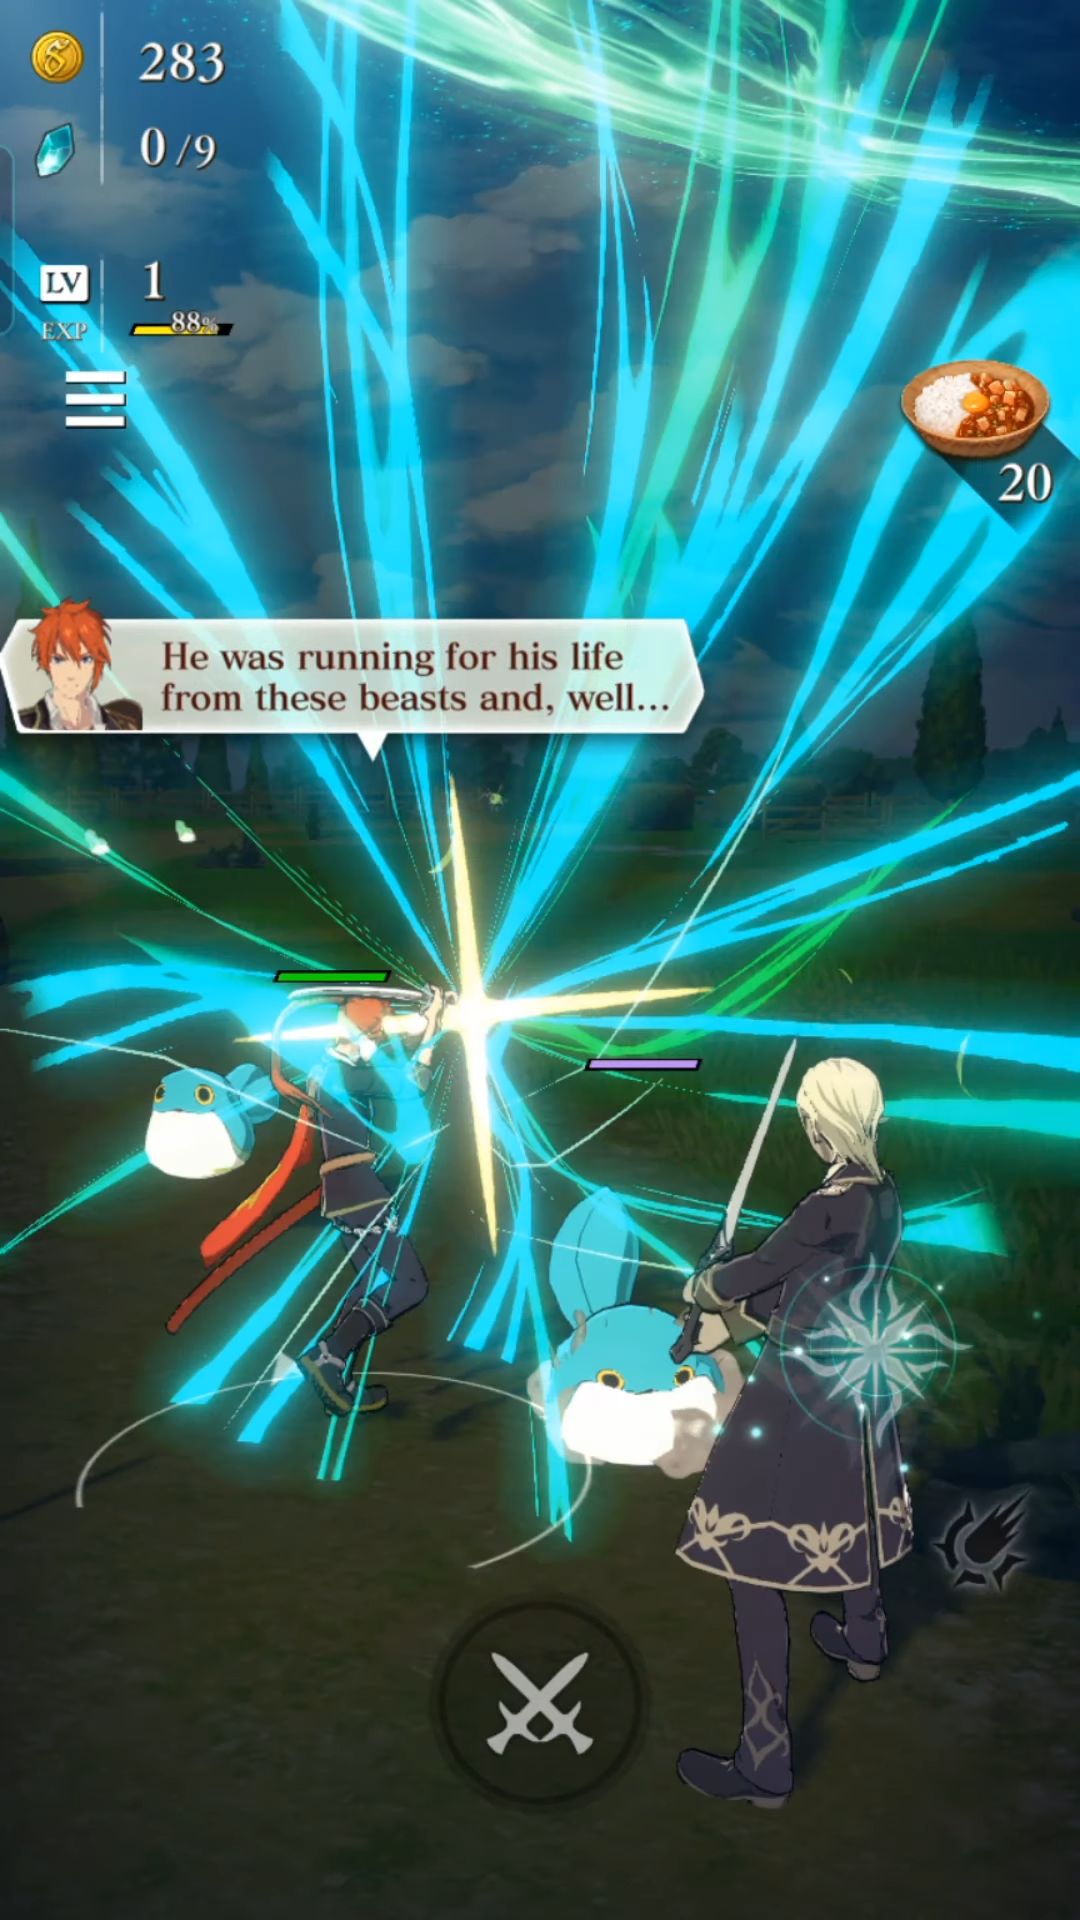 Tales of Luminaria - Anime RPG - Android game screenshots.